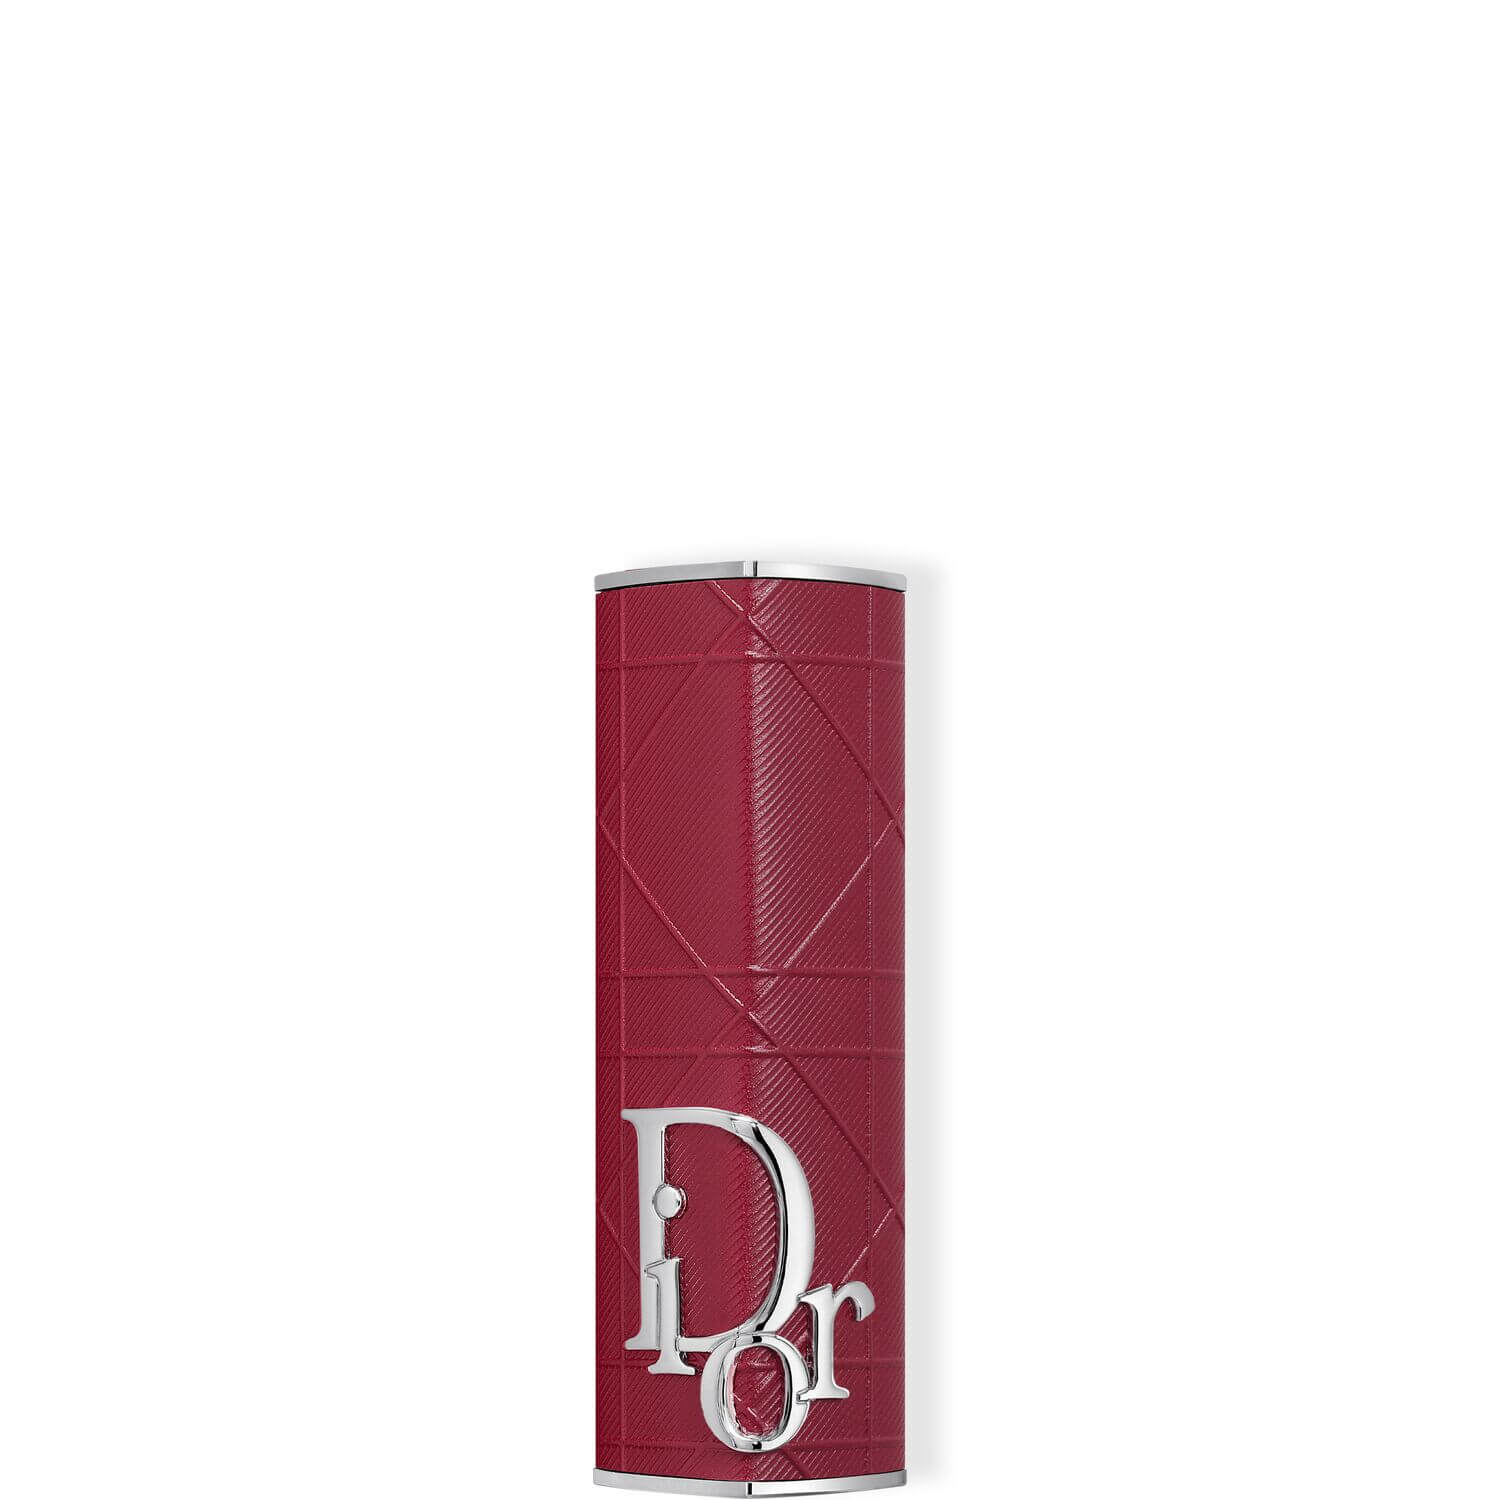 dior addict labial case couture (carcasa para barra de labios)